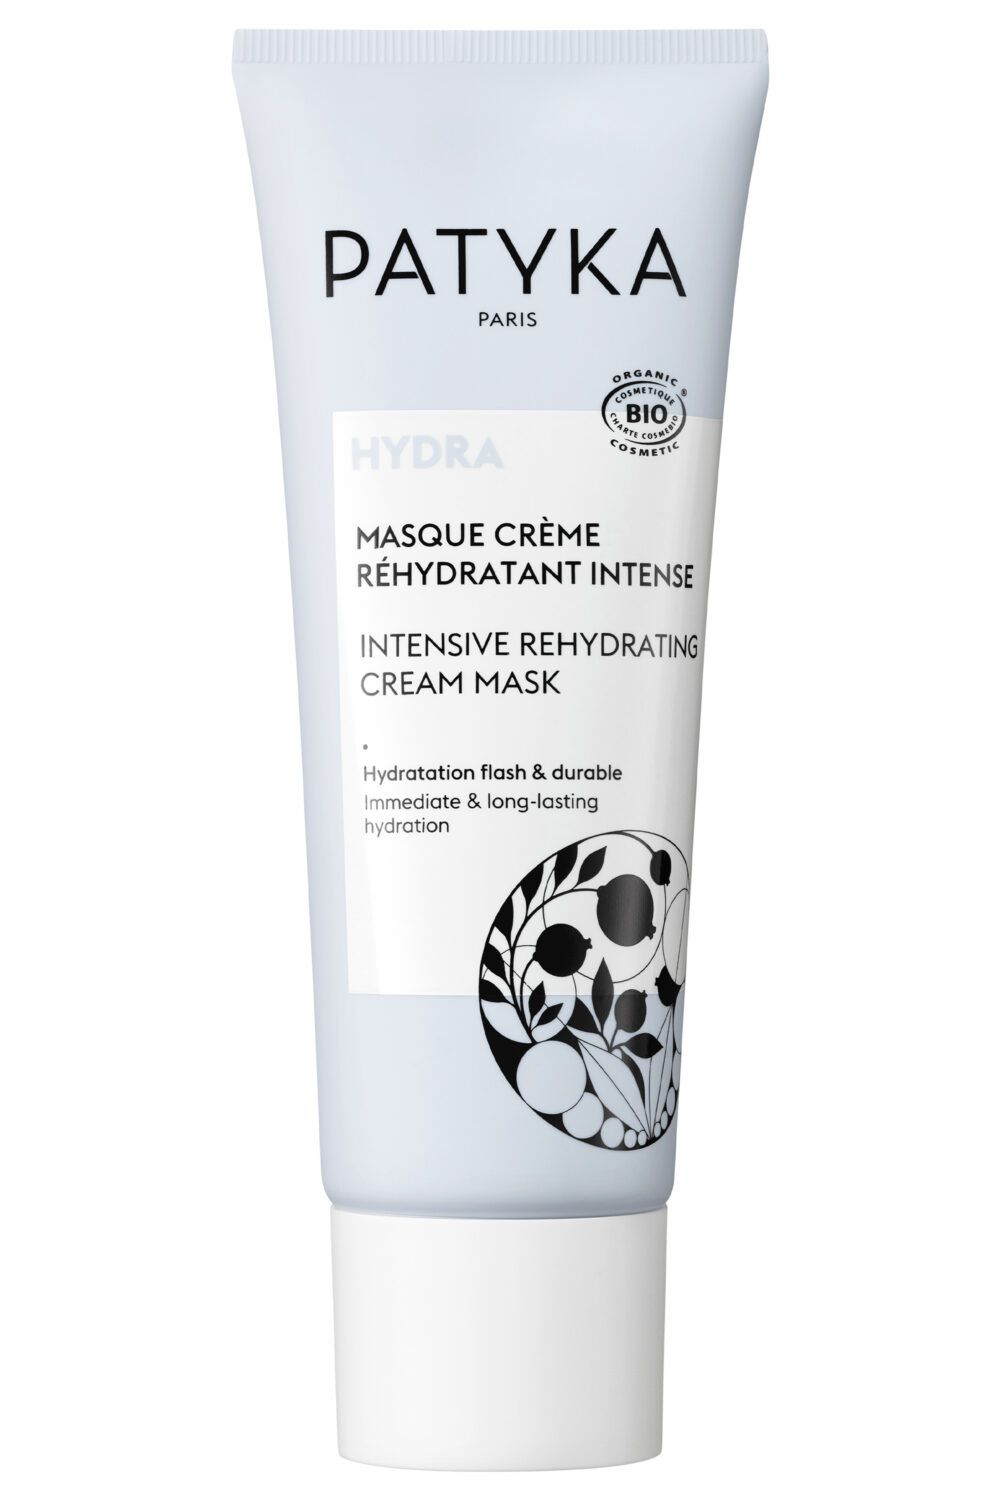 Patyka - Masque crème réhydratant intense